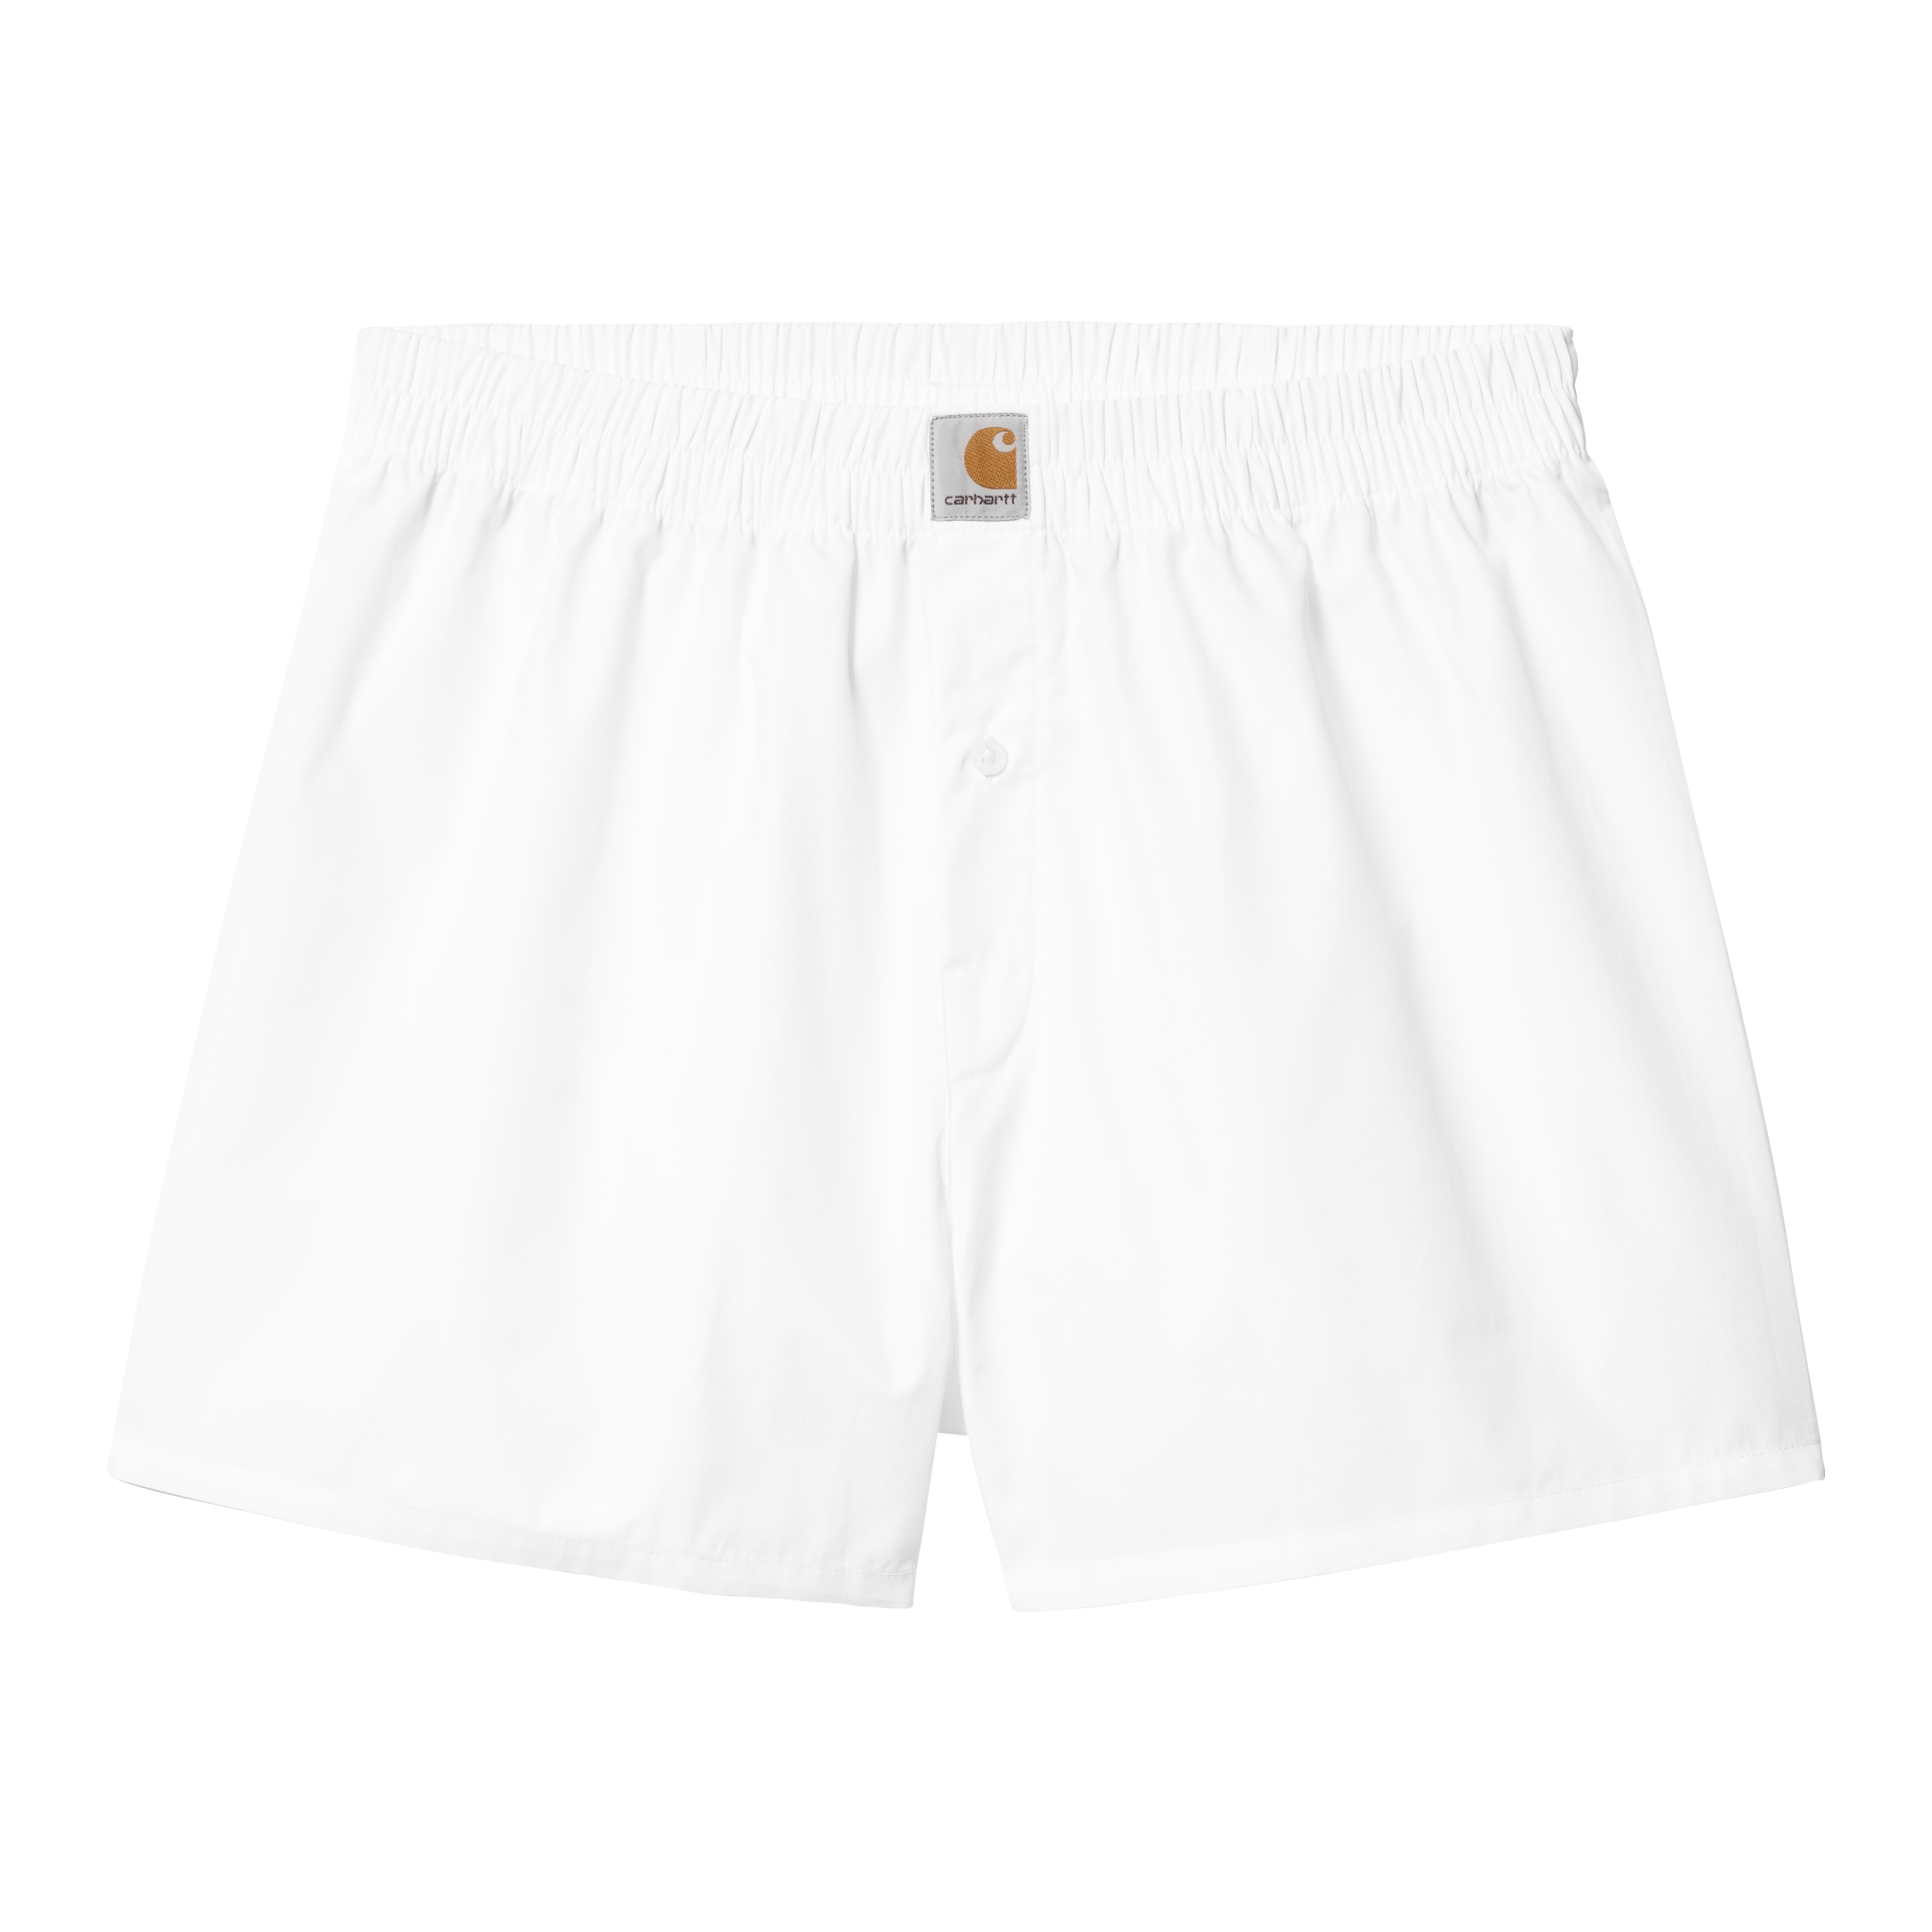 Carhartt Underwear: Men's MUS130 Black Classic Union Cotton